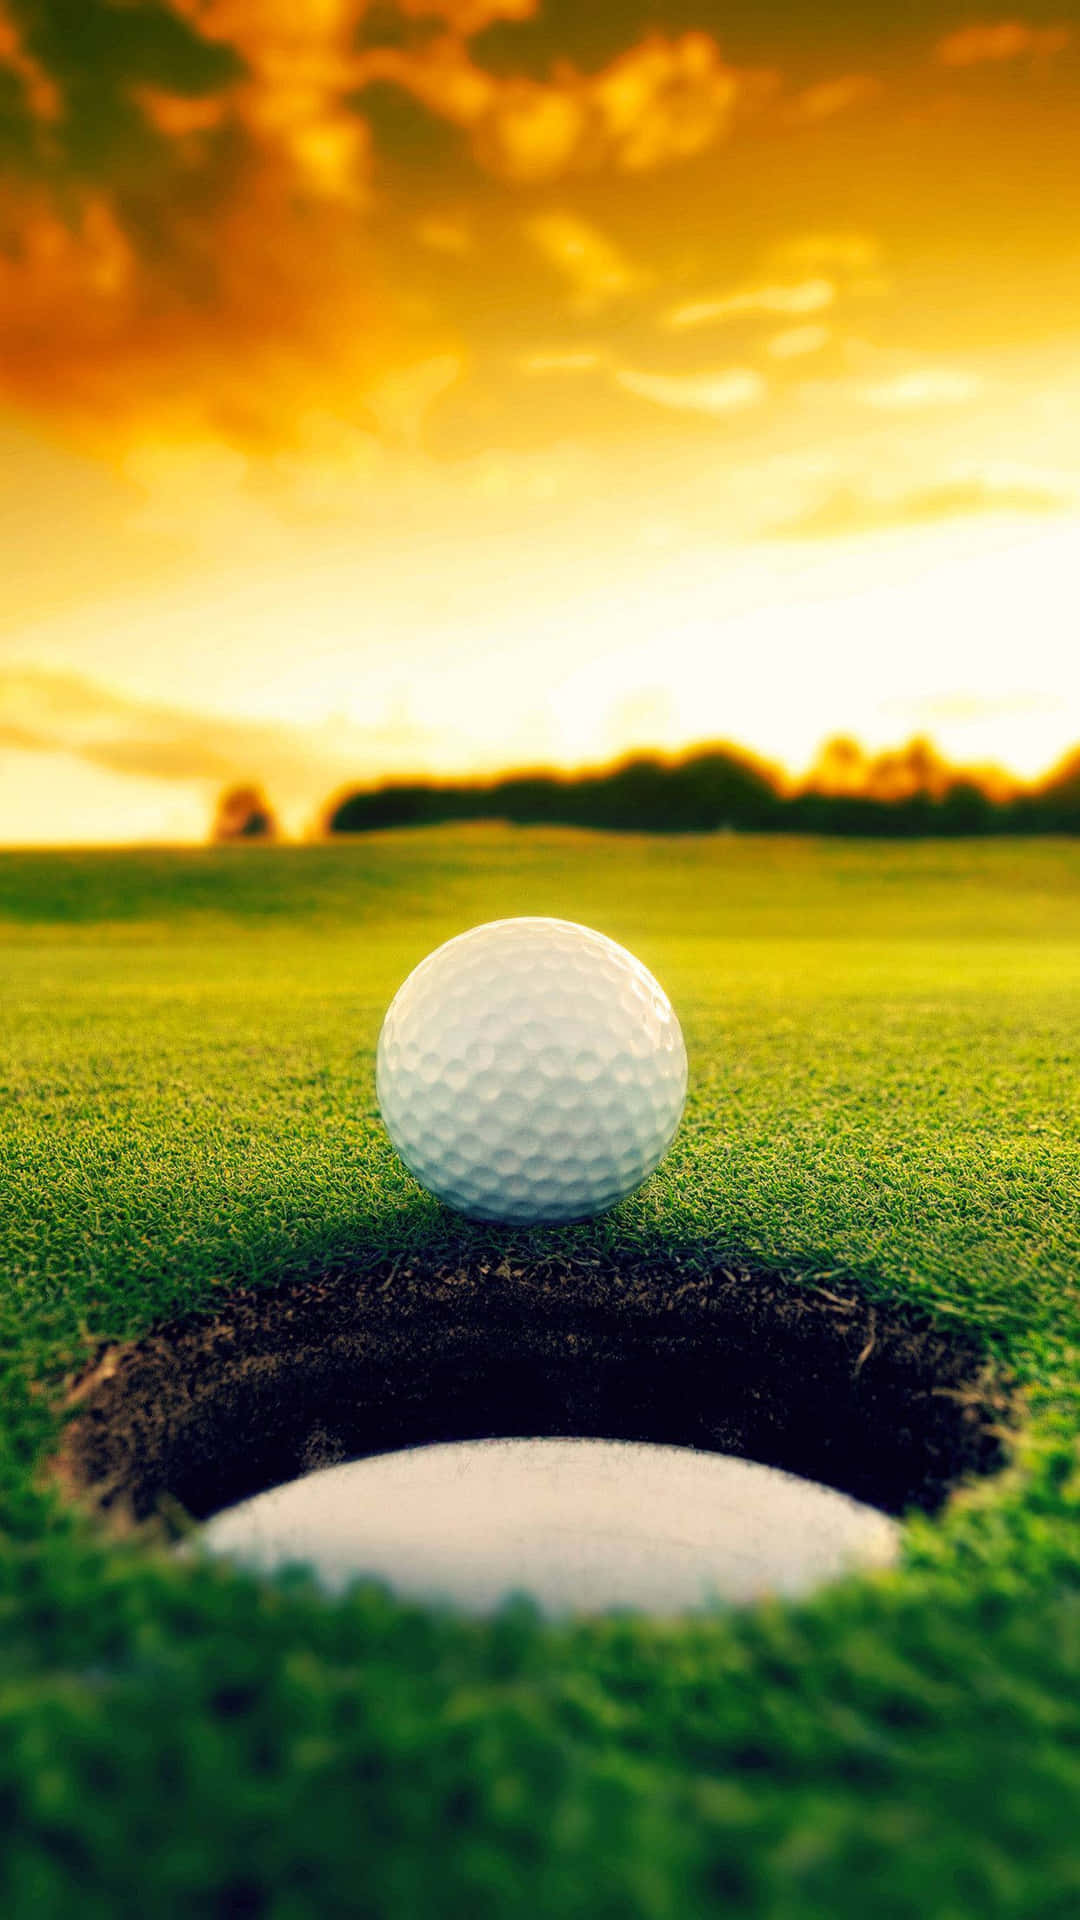 Golf Ball In Augusta National Iphone Wallpaper